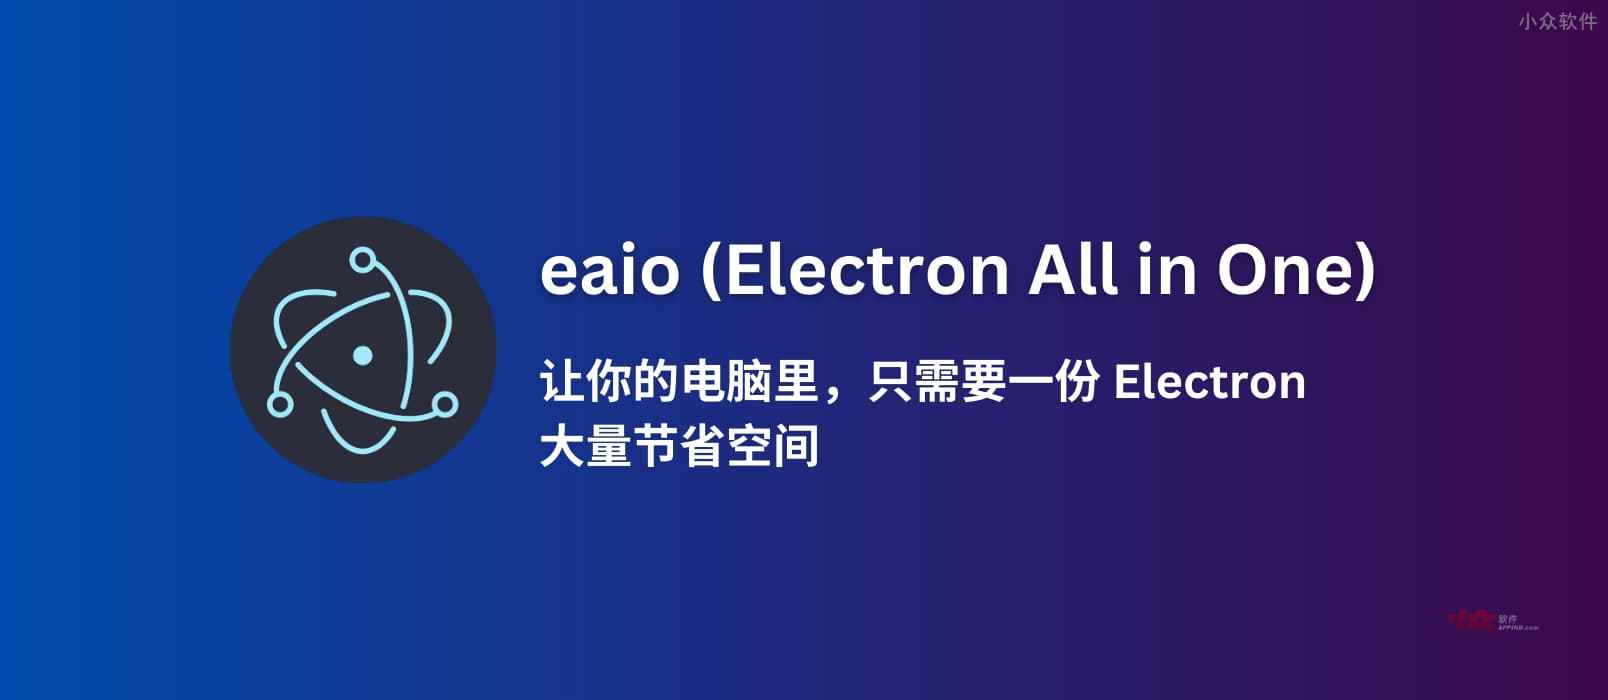 eaio (Electron All in One) – 让你的电脑里，只需要一份 Electron，大量节省空间。